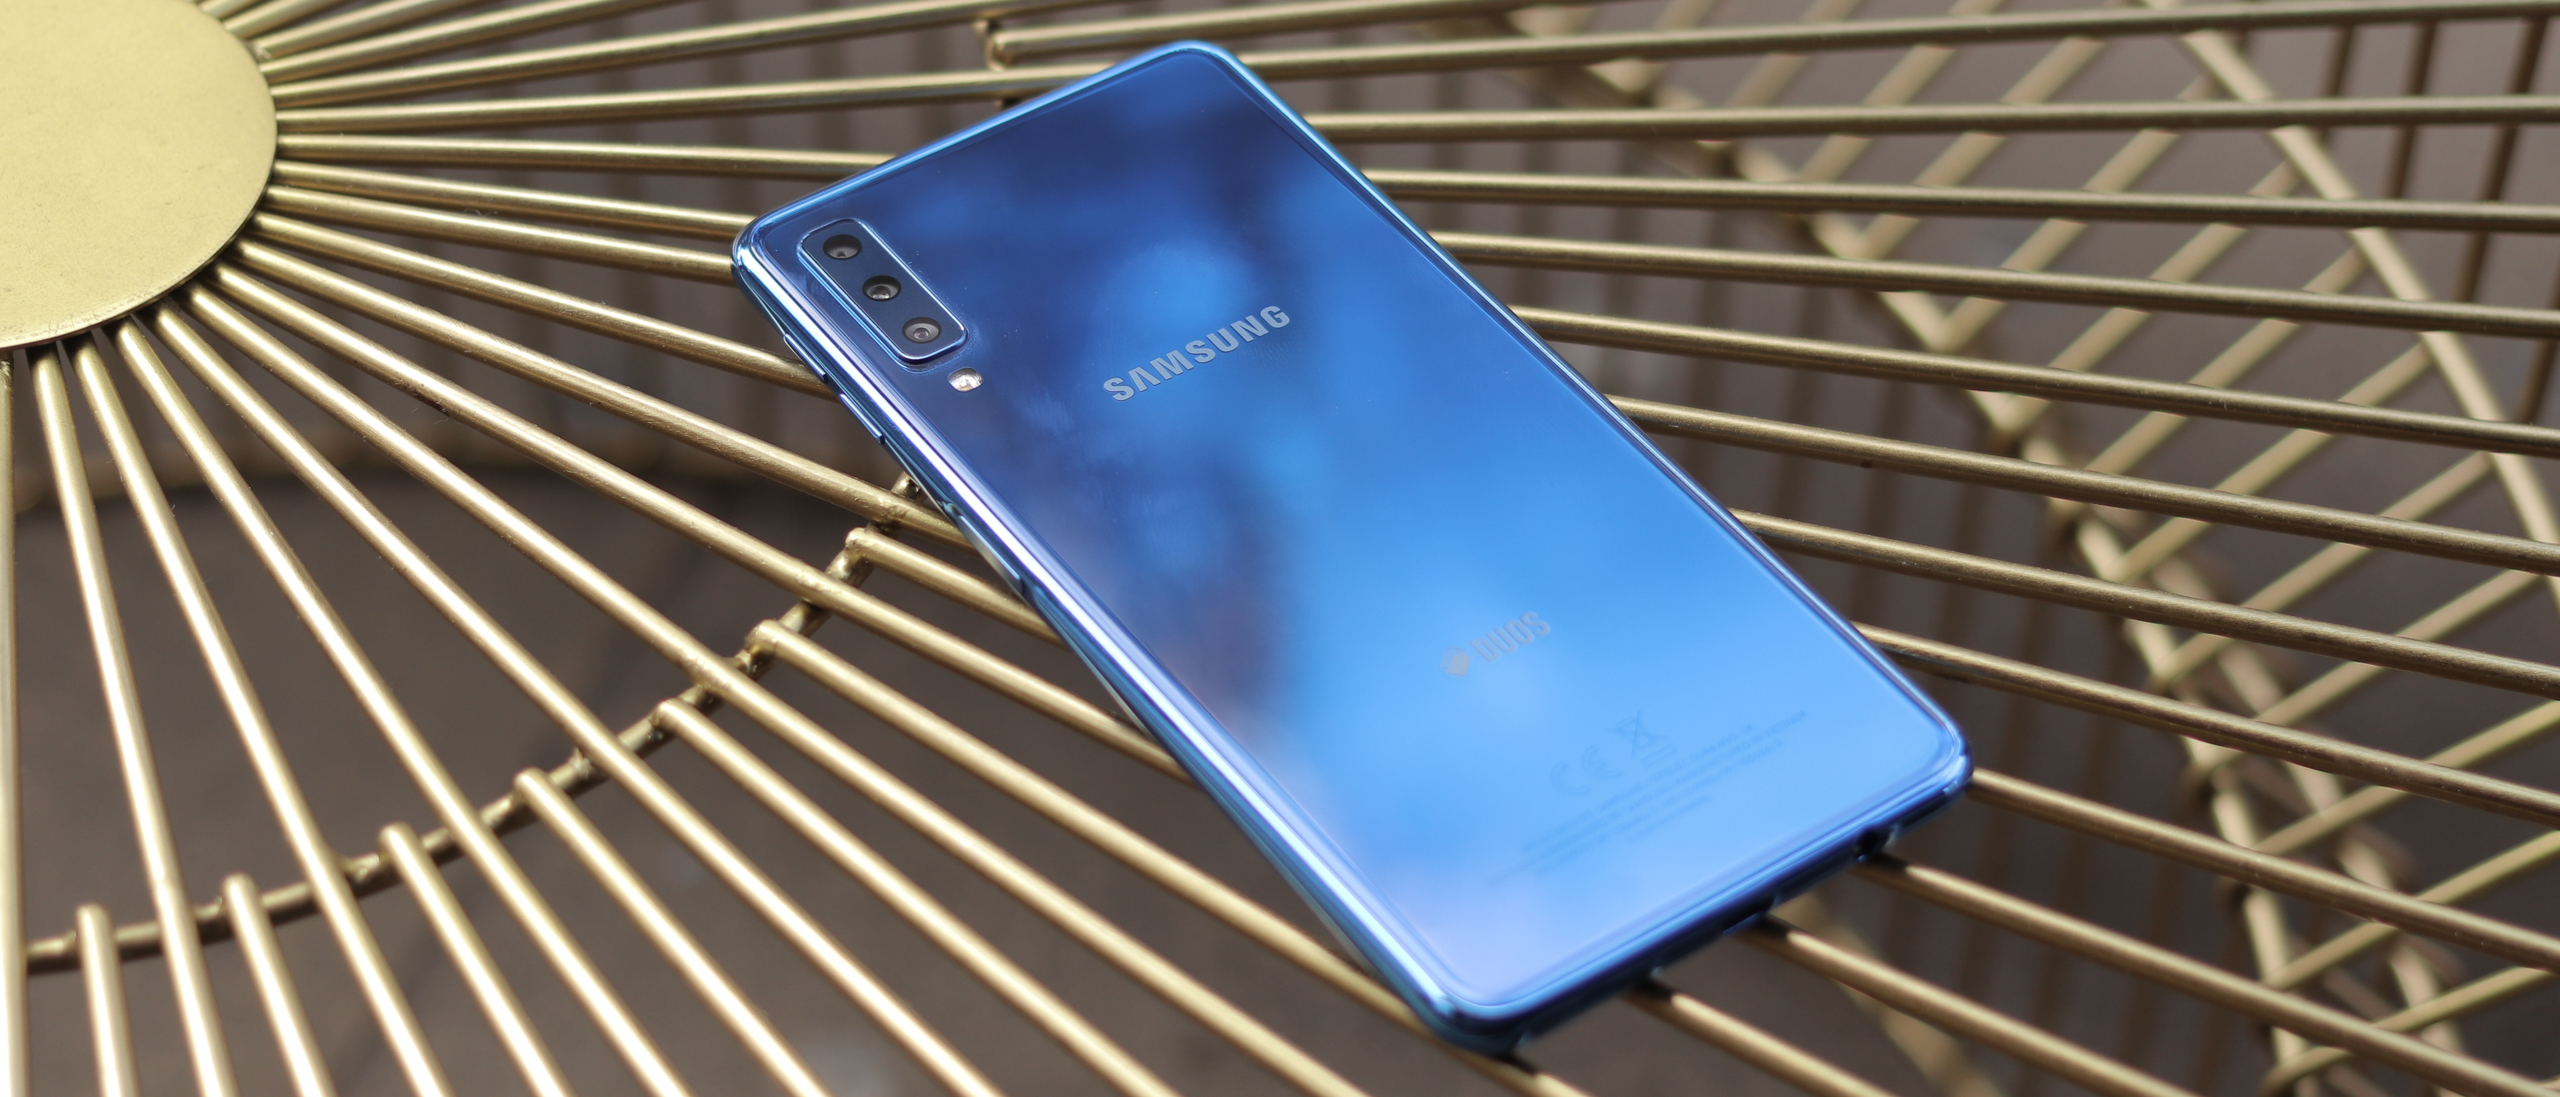 Samsung Galaxy A7 (2018) review | TechRadar